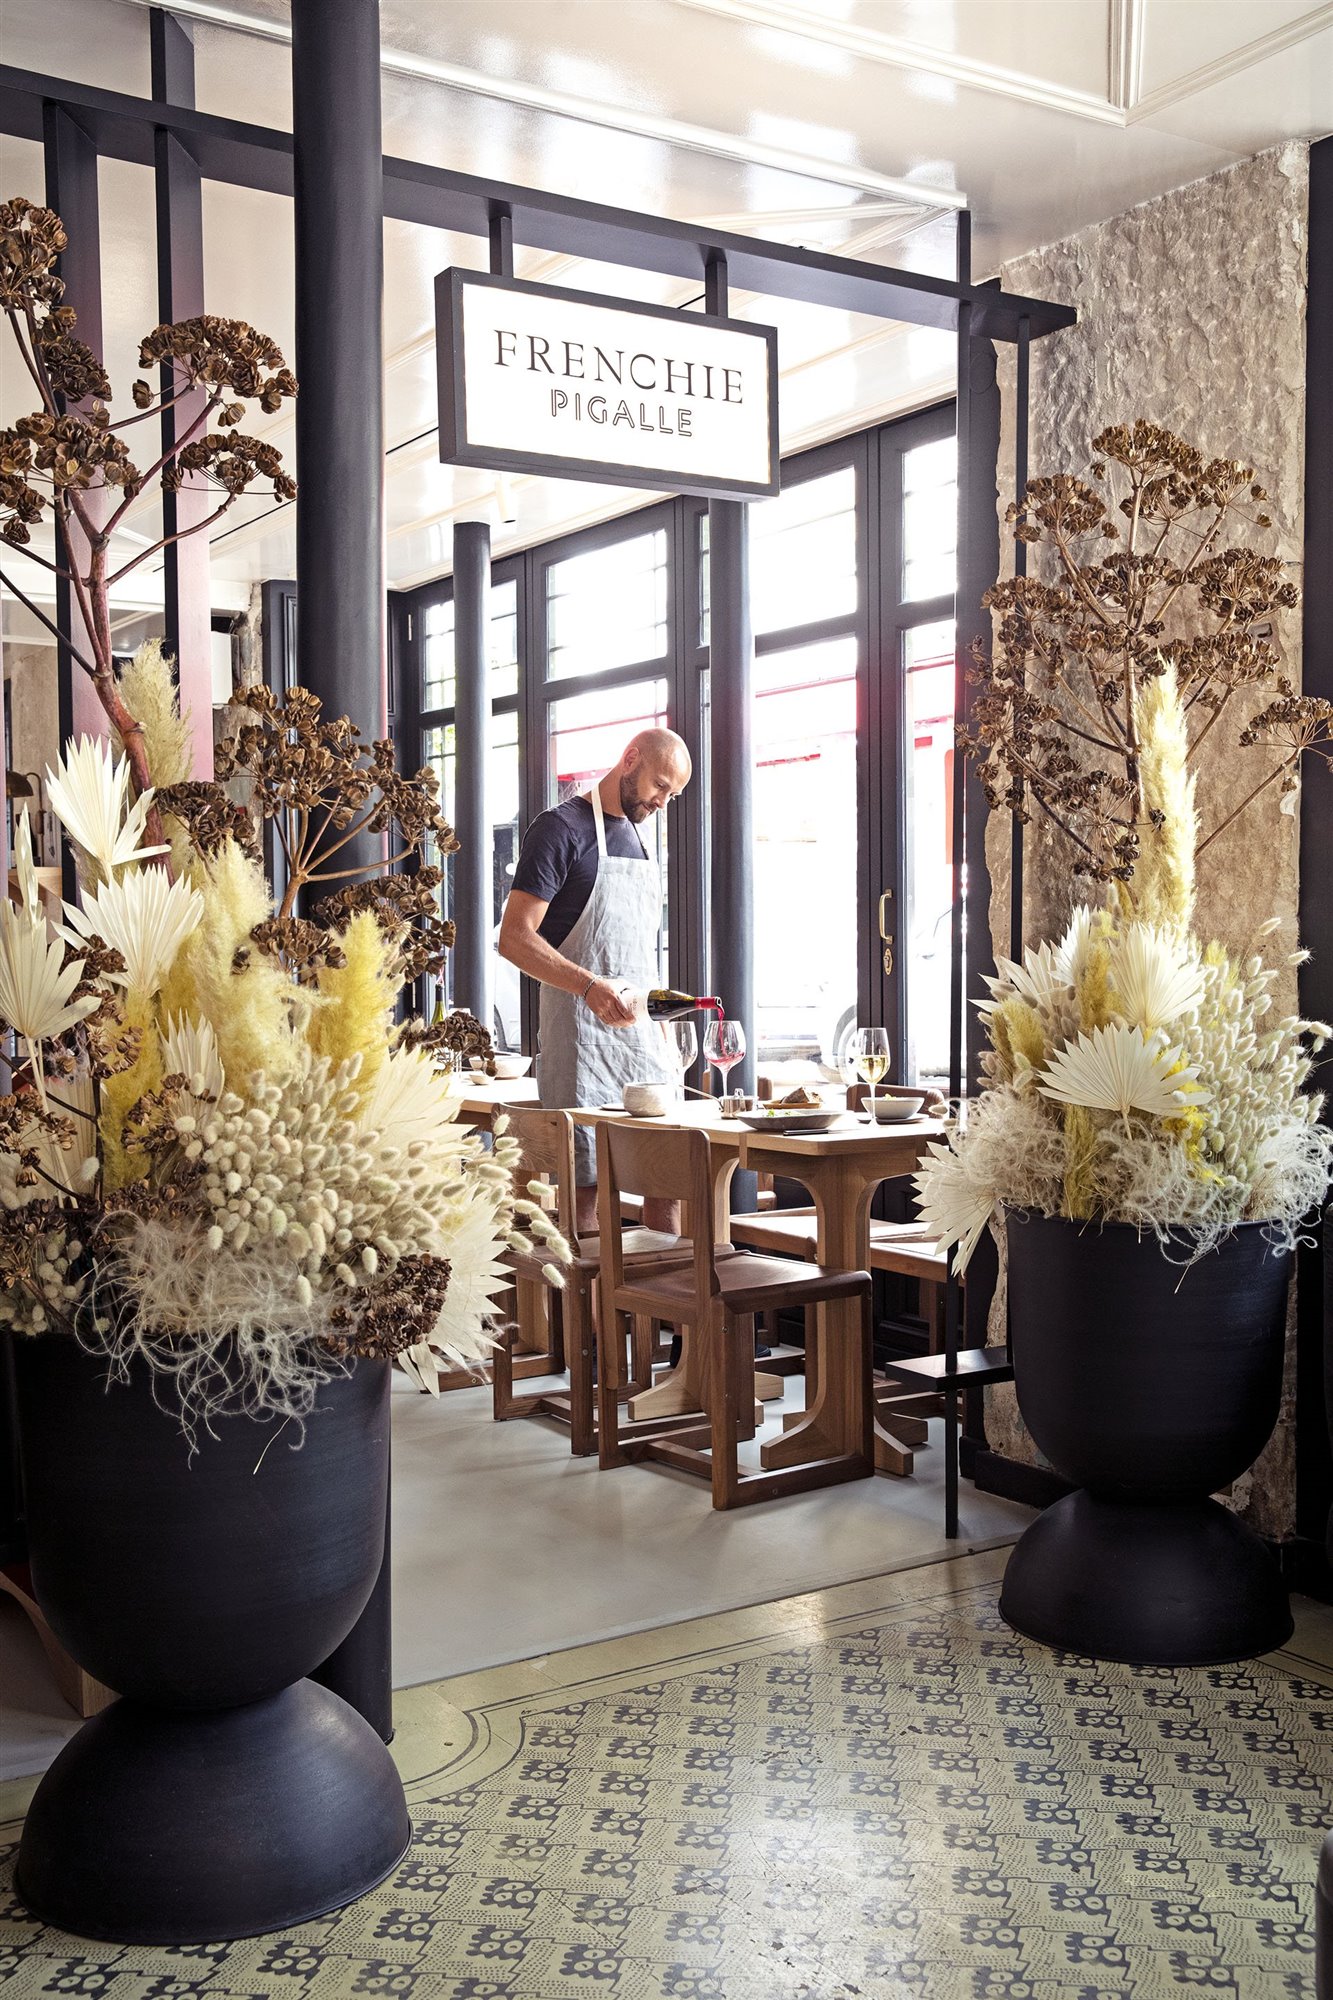 Entrada con flores del restaurante Frances Frenchie Pigale